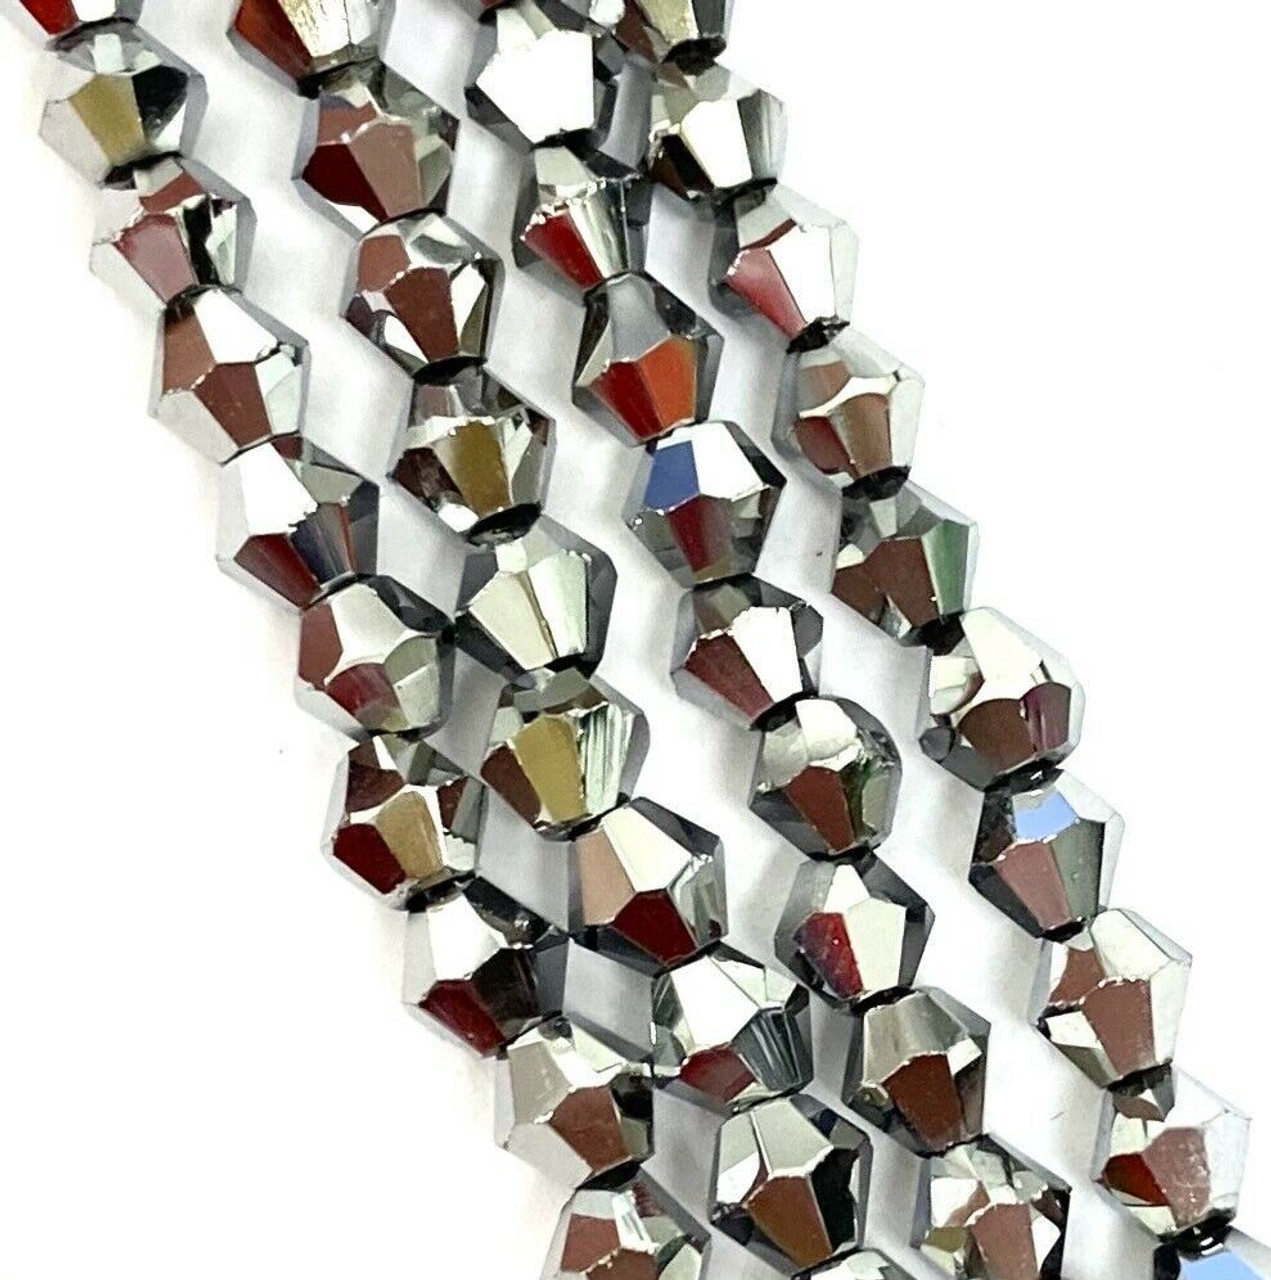 4mm Glass Bicone beads - PLATINUM METALLIC - approx 12" strand (75-80 beads)